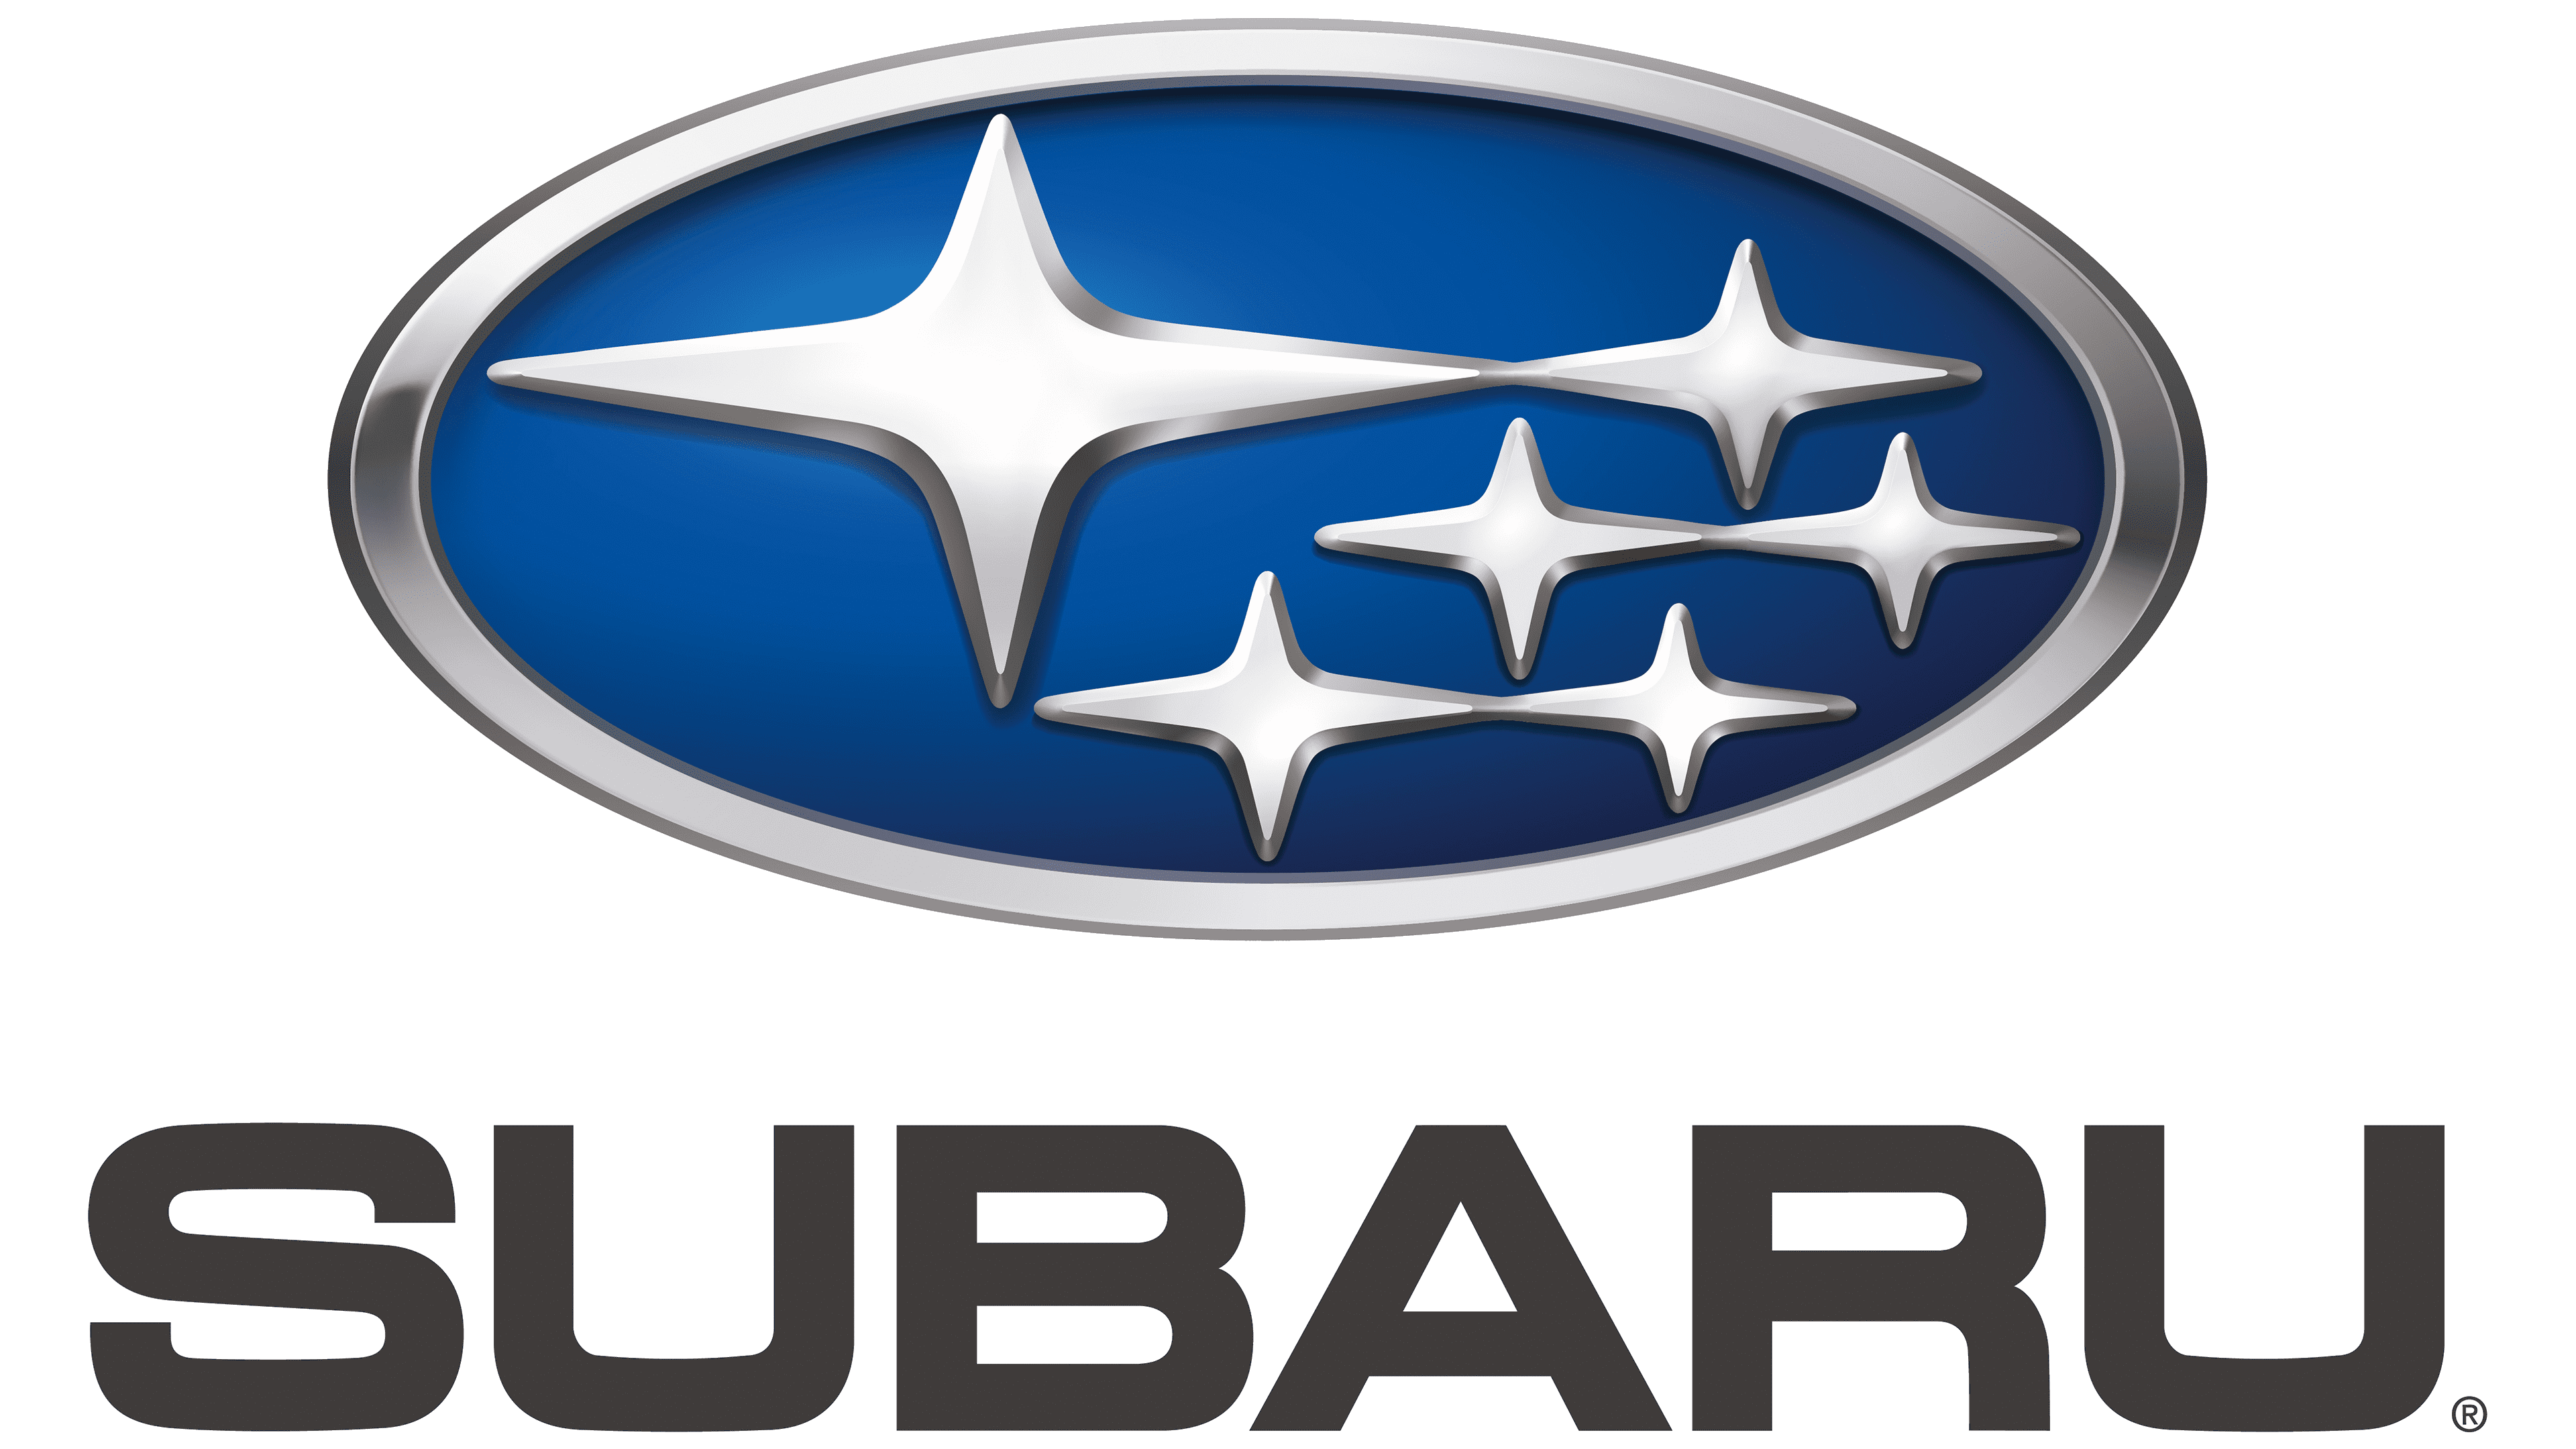 Subaru logo image